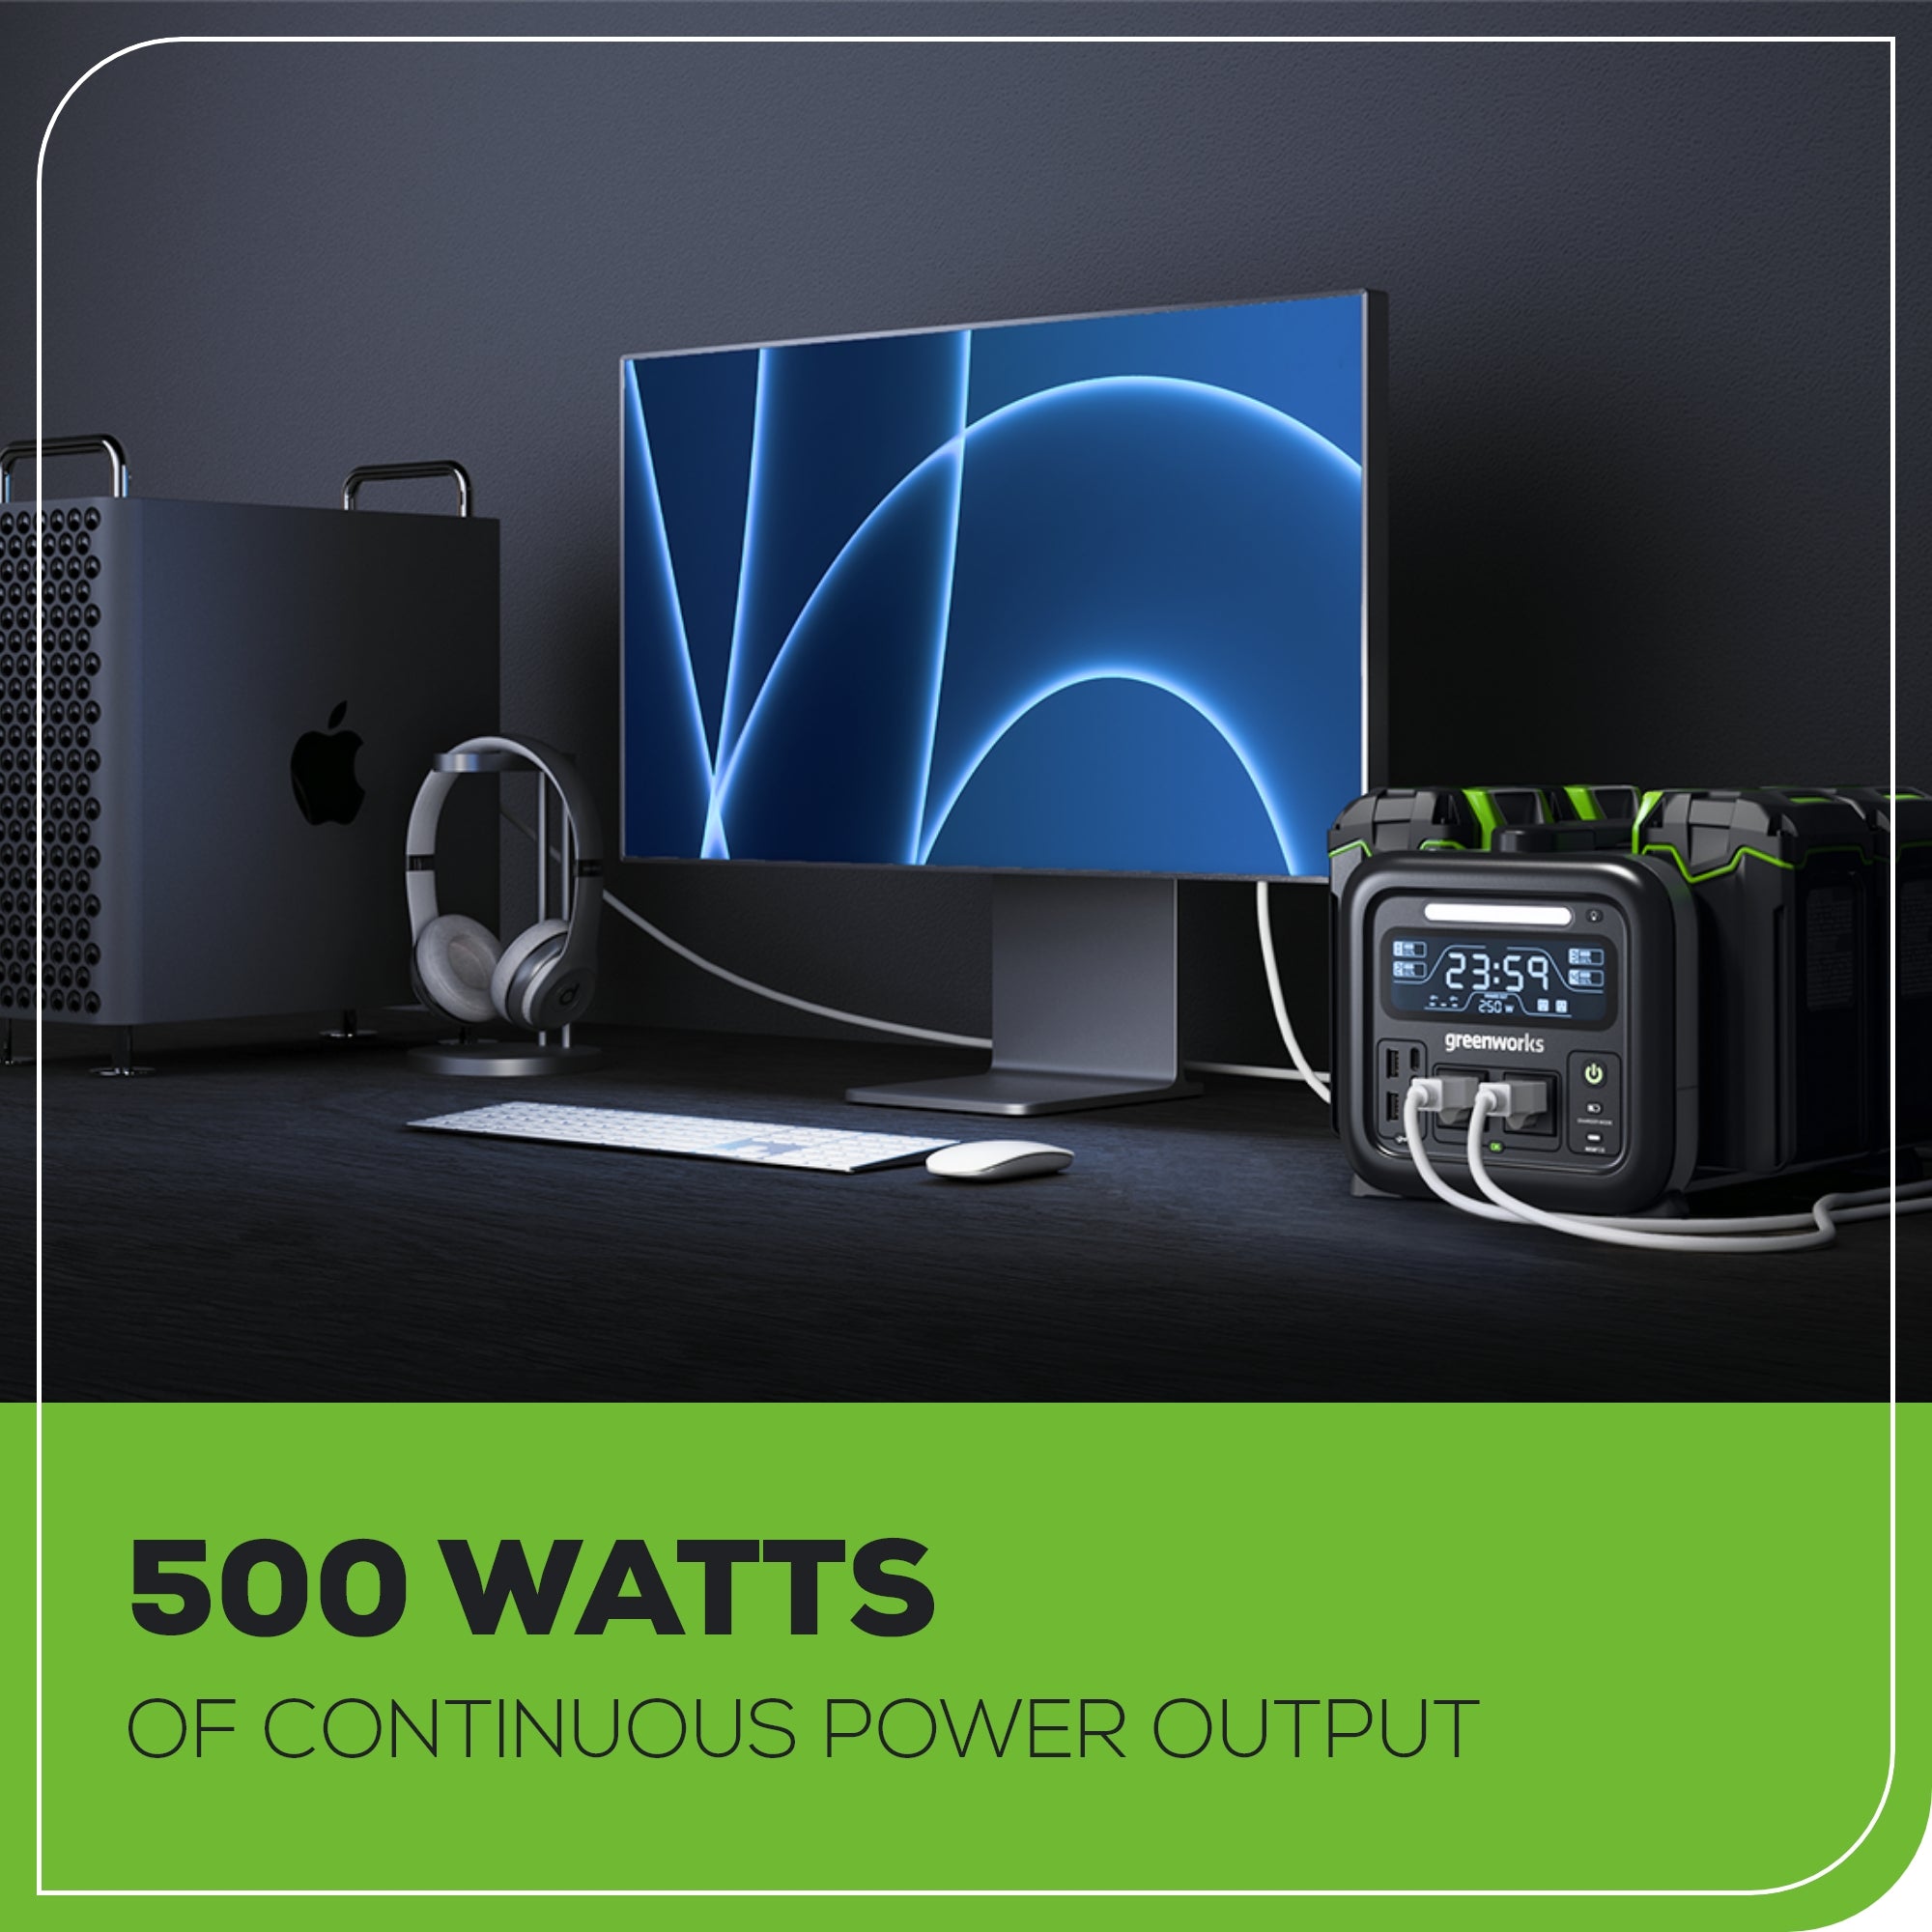 40V 500W 4-Slot Inverter Portable Power Station w/ (4) 4.0Ah Batteries & Built-In Charger